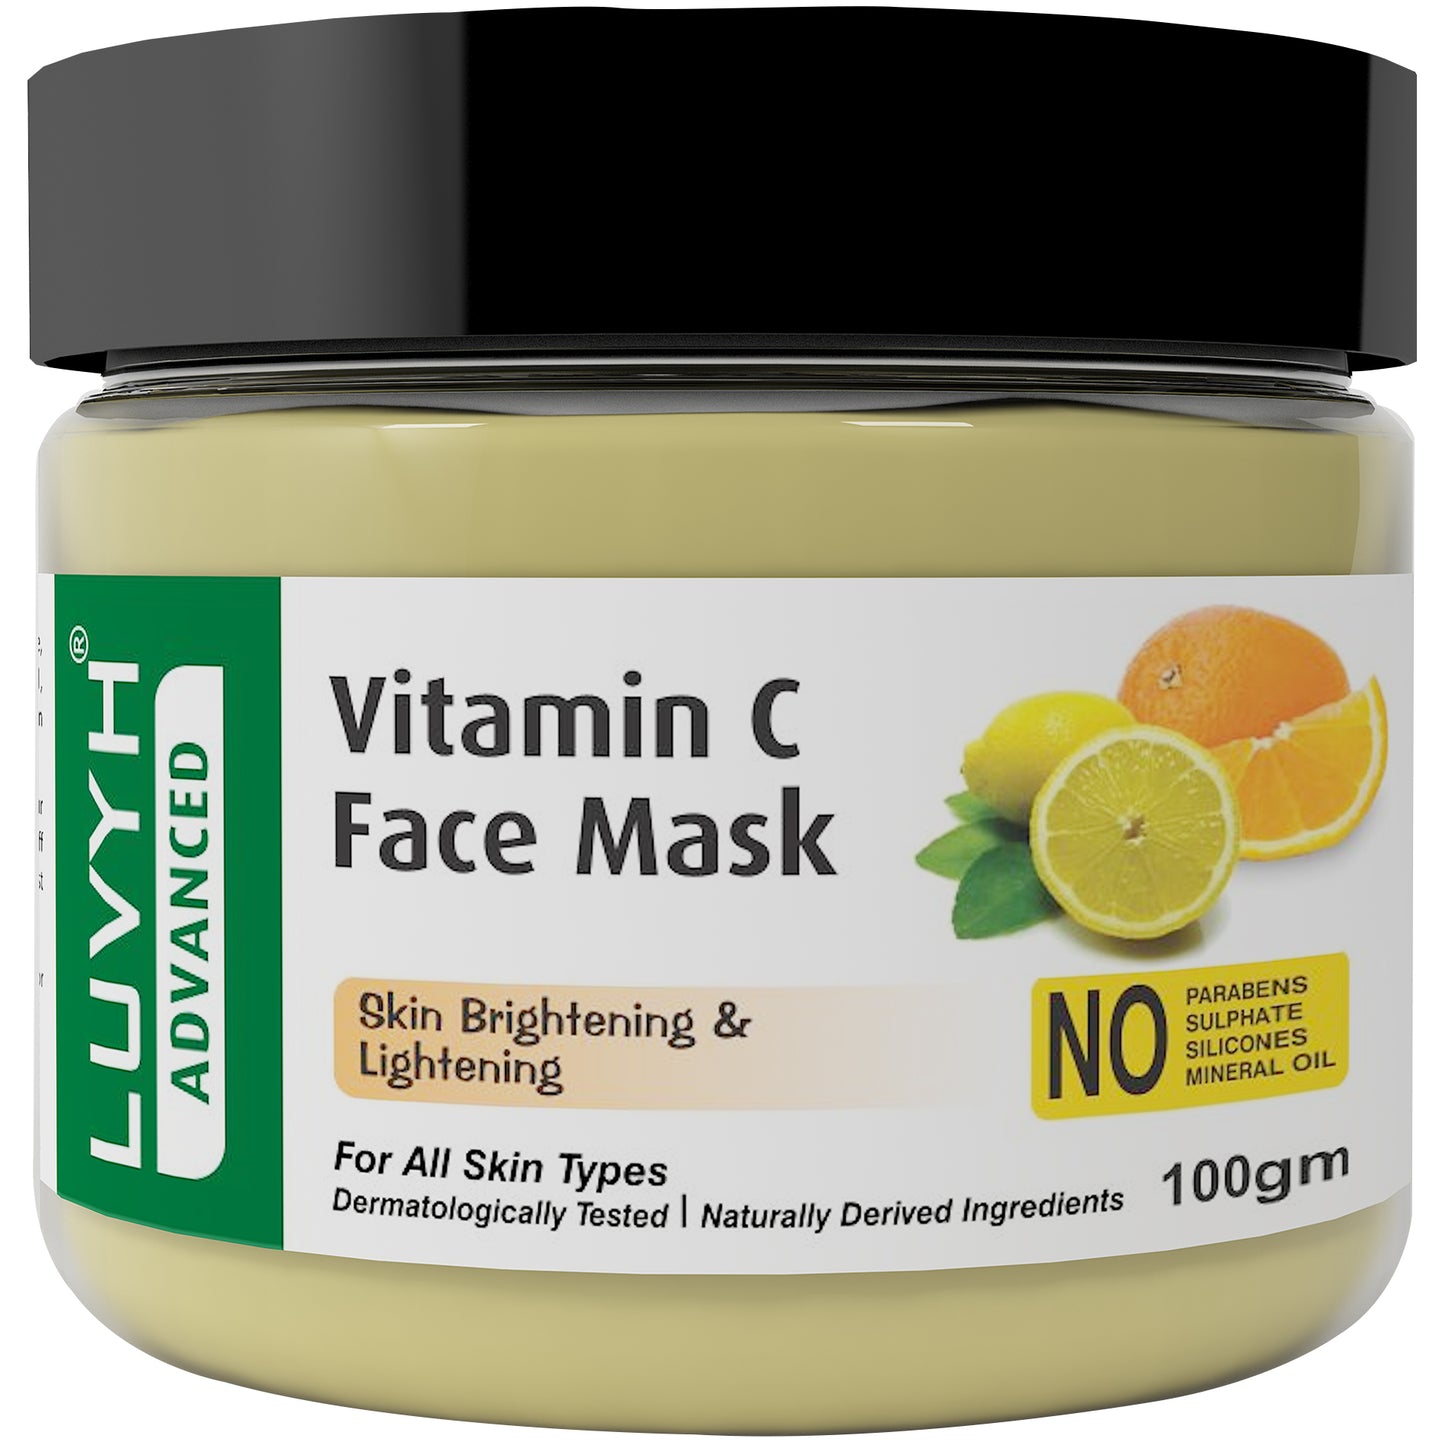 Luvyh Vitamin C Face Mask - 100g